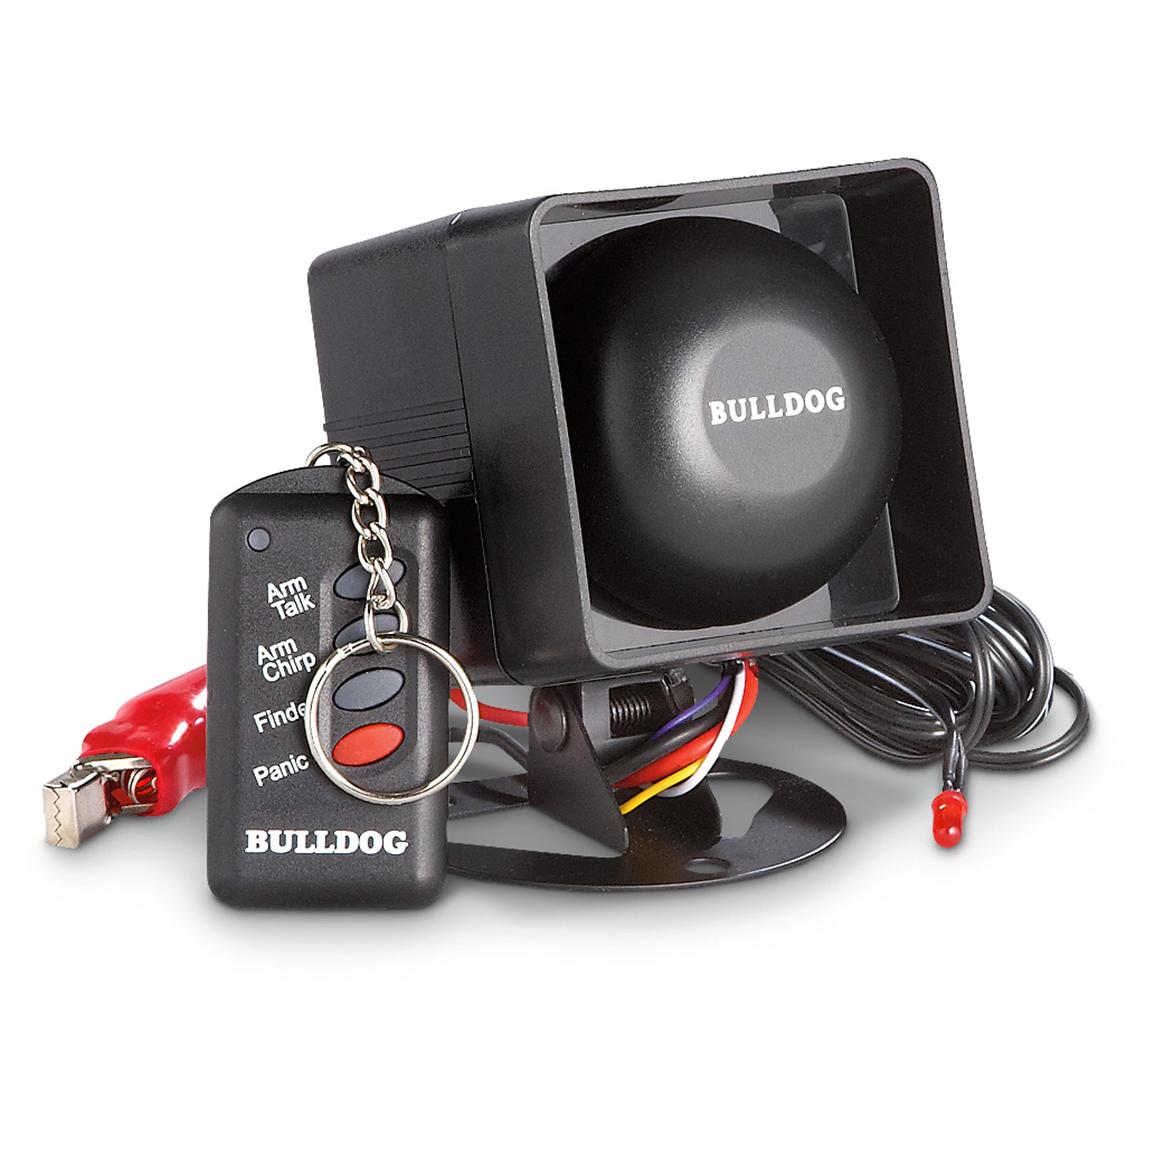 Bulldog® Talking Alarm System 236175, Accessories at